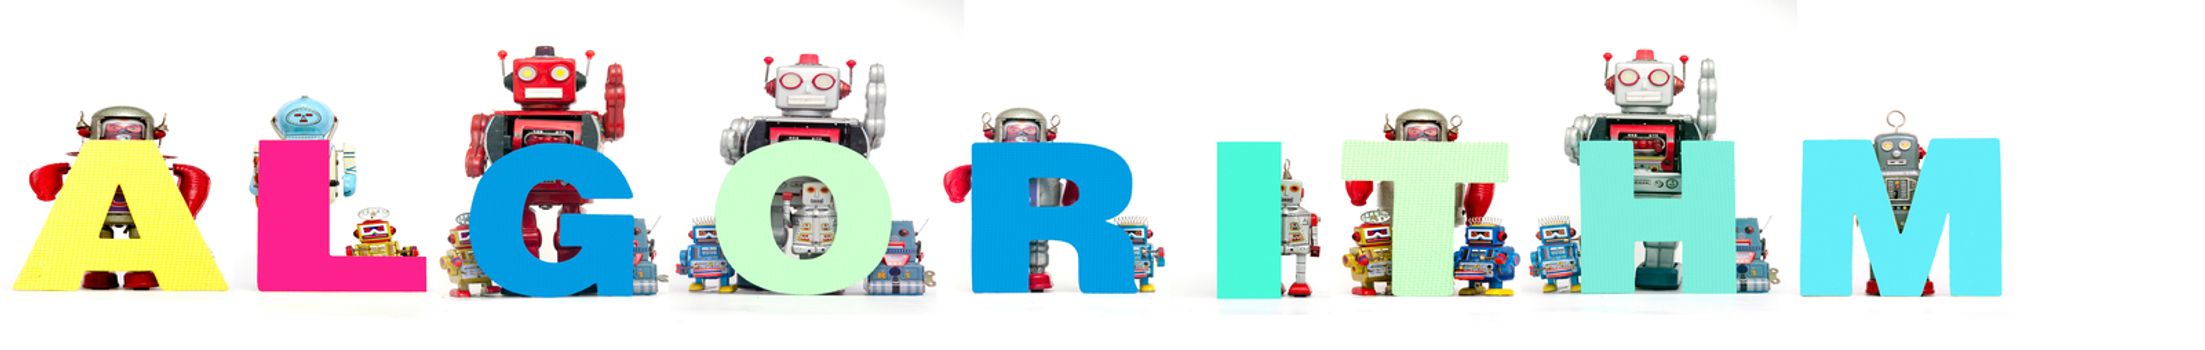 retro tin robot toys hold up the word ALGORITHM isolated on white 